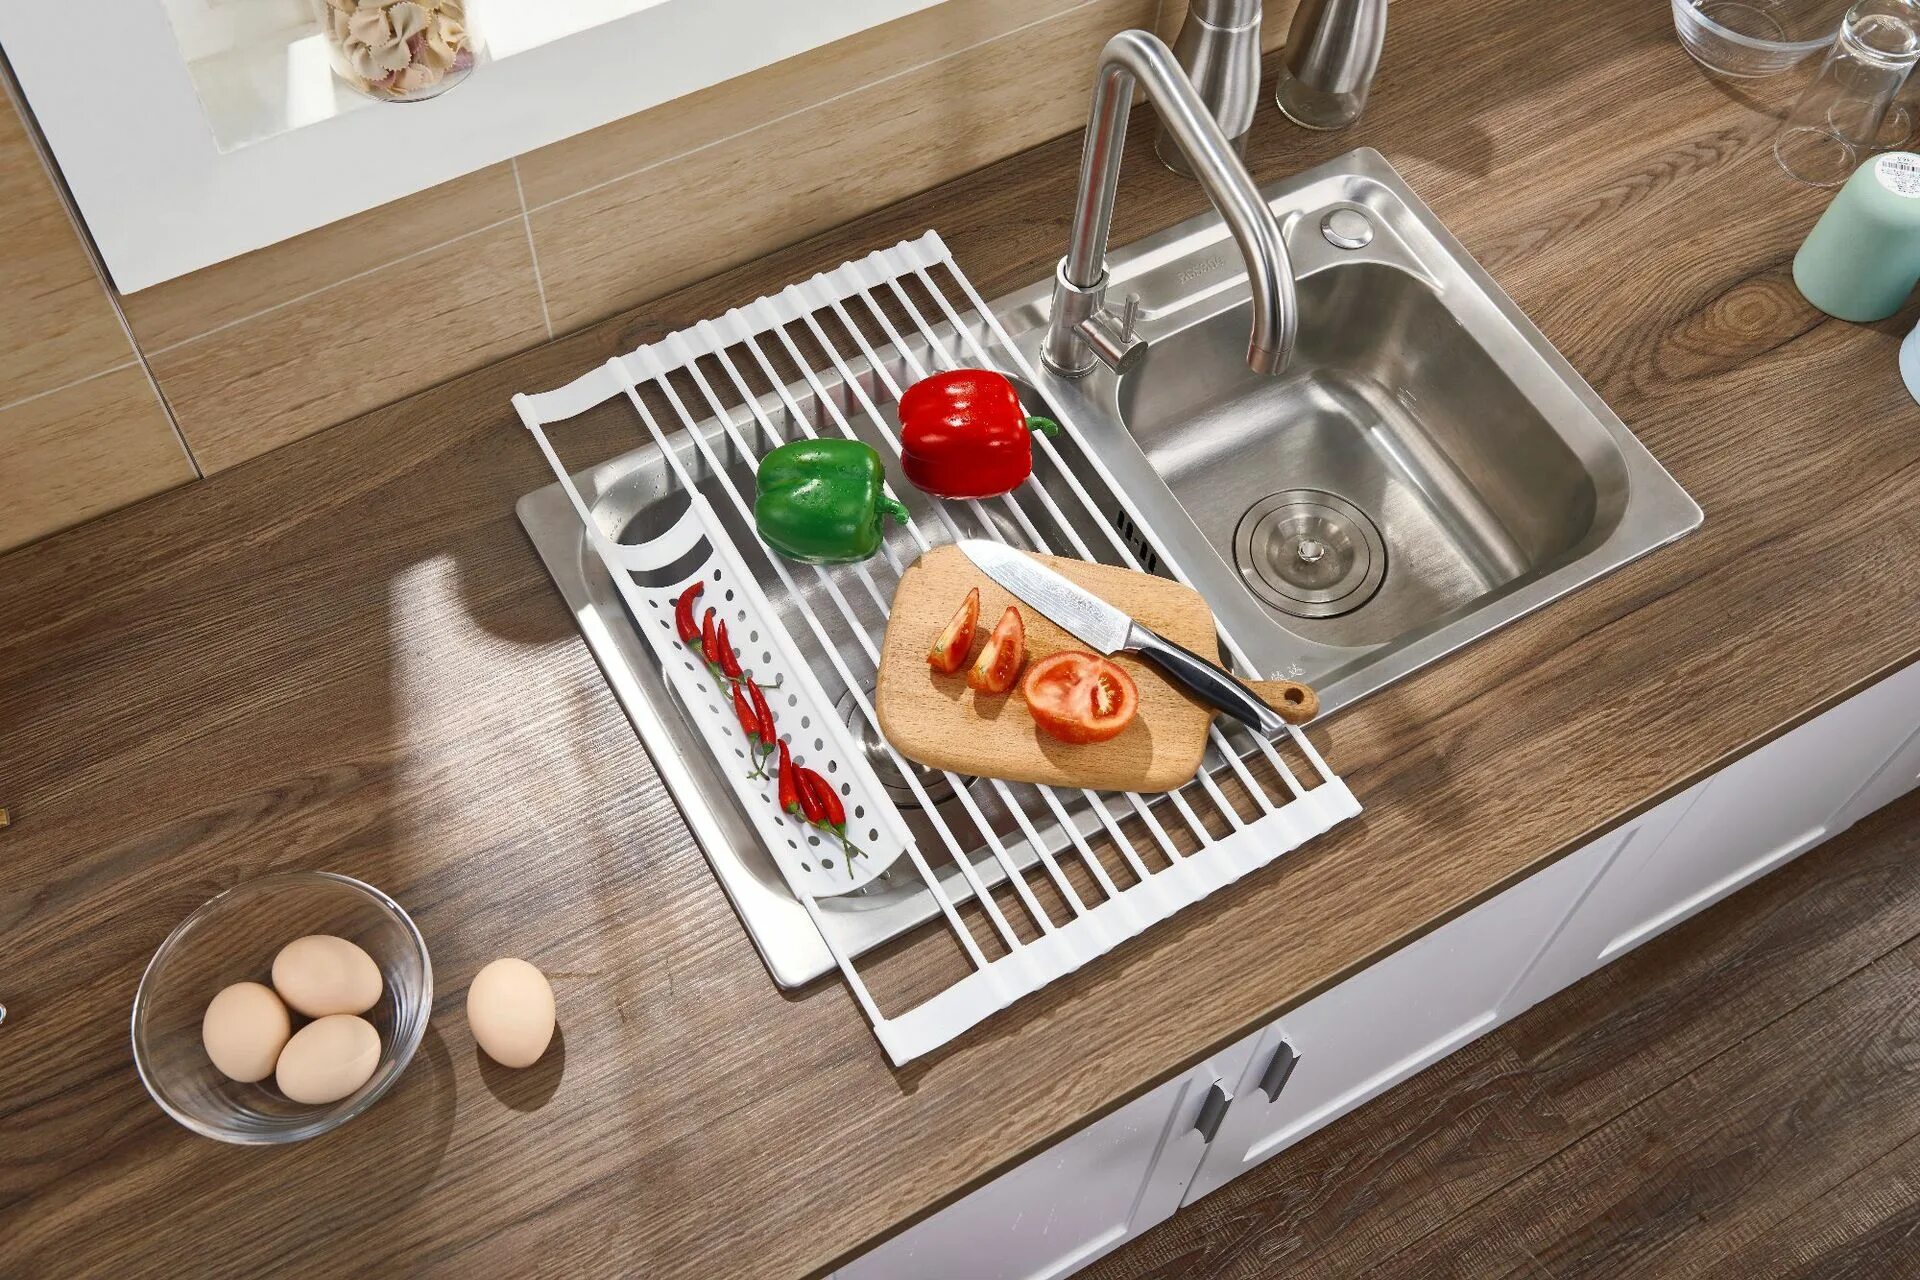 Кухонная решетка для посуды. Решетка для сушки посуды. Решетка для сушки посуды на мойку. Раскладная сушилка для посуды на раковину. Сушилка для посуды настольная раздвижная.